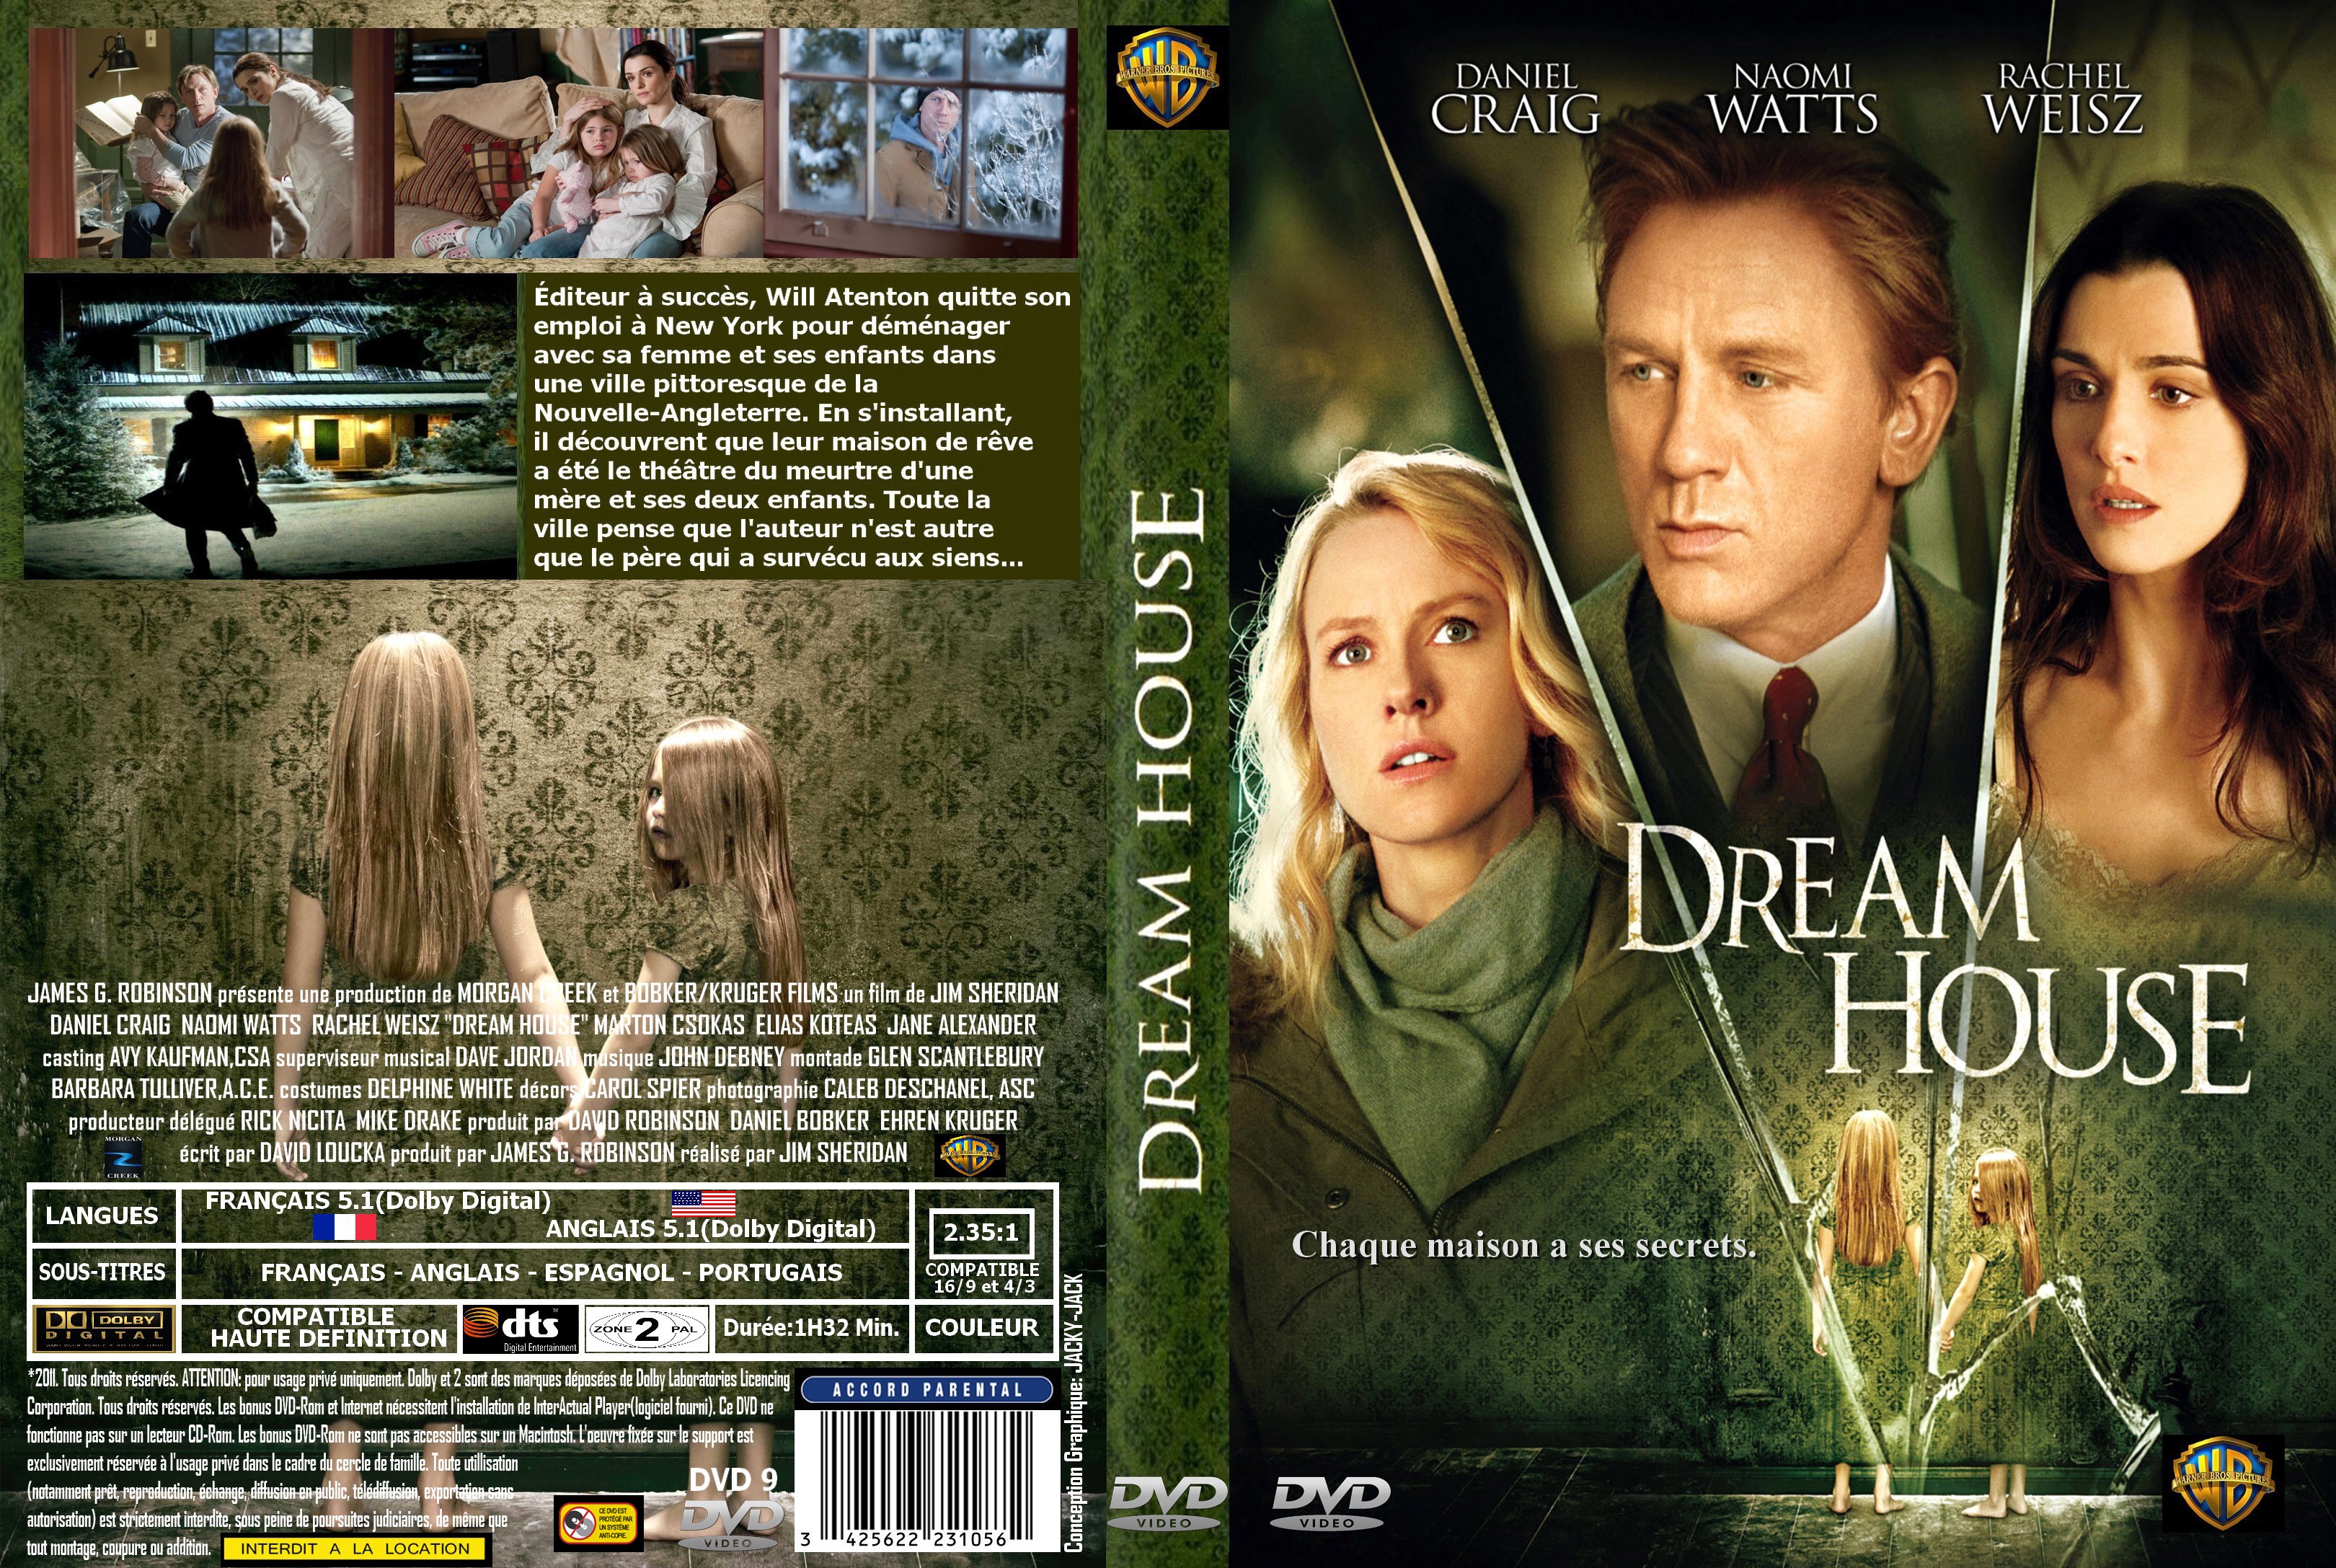 Jaquette DVD Dream House custom